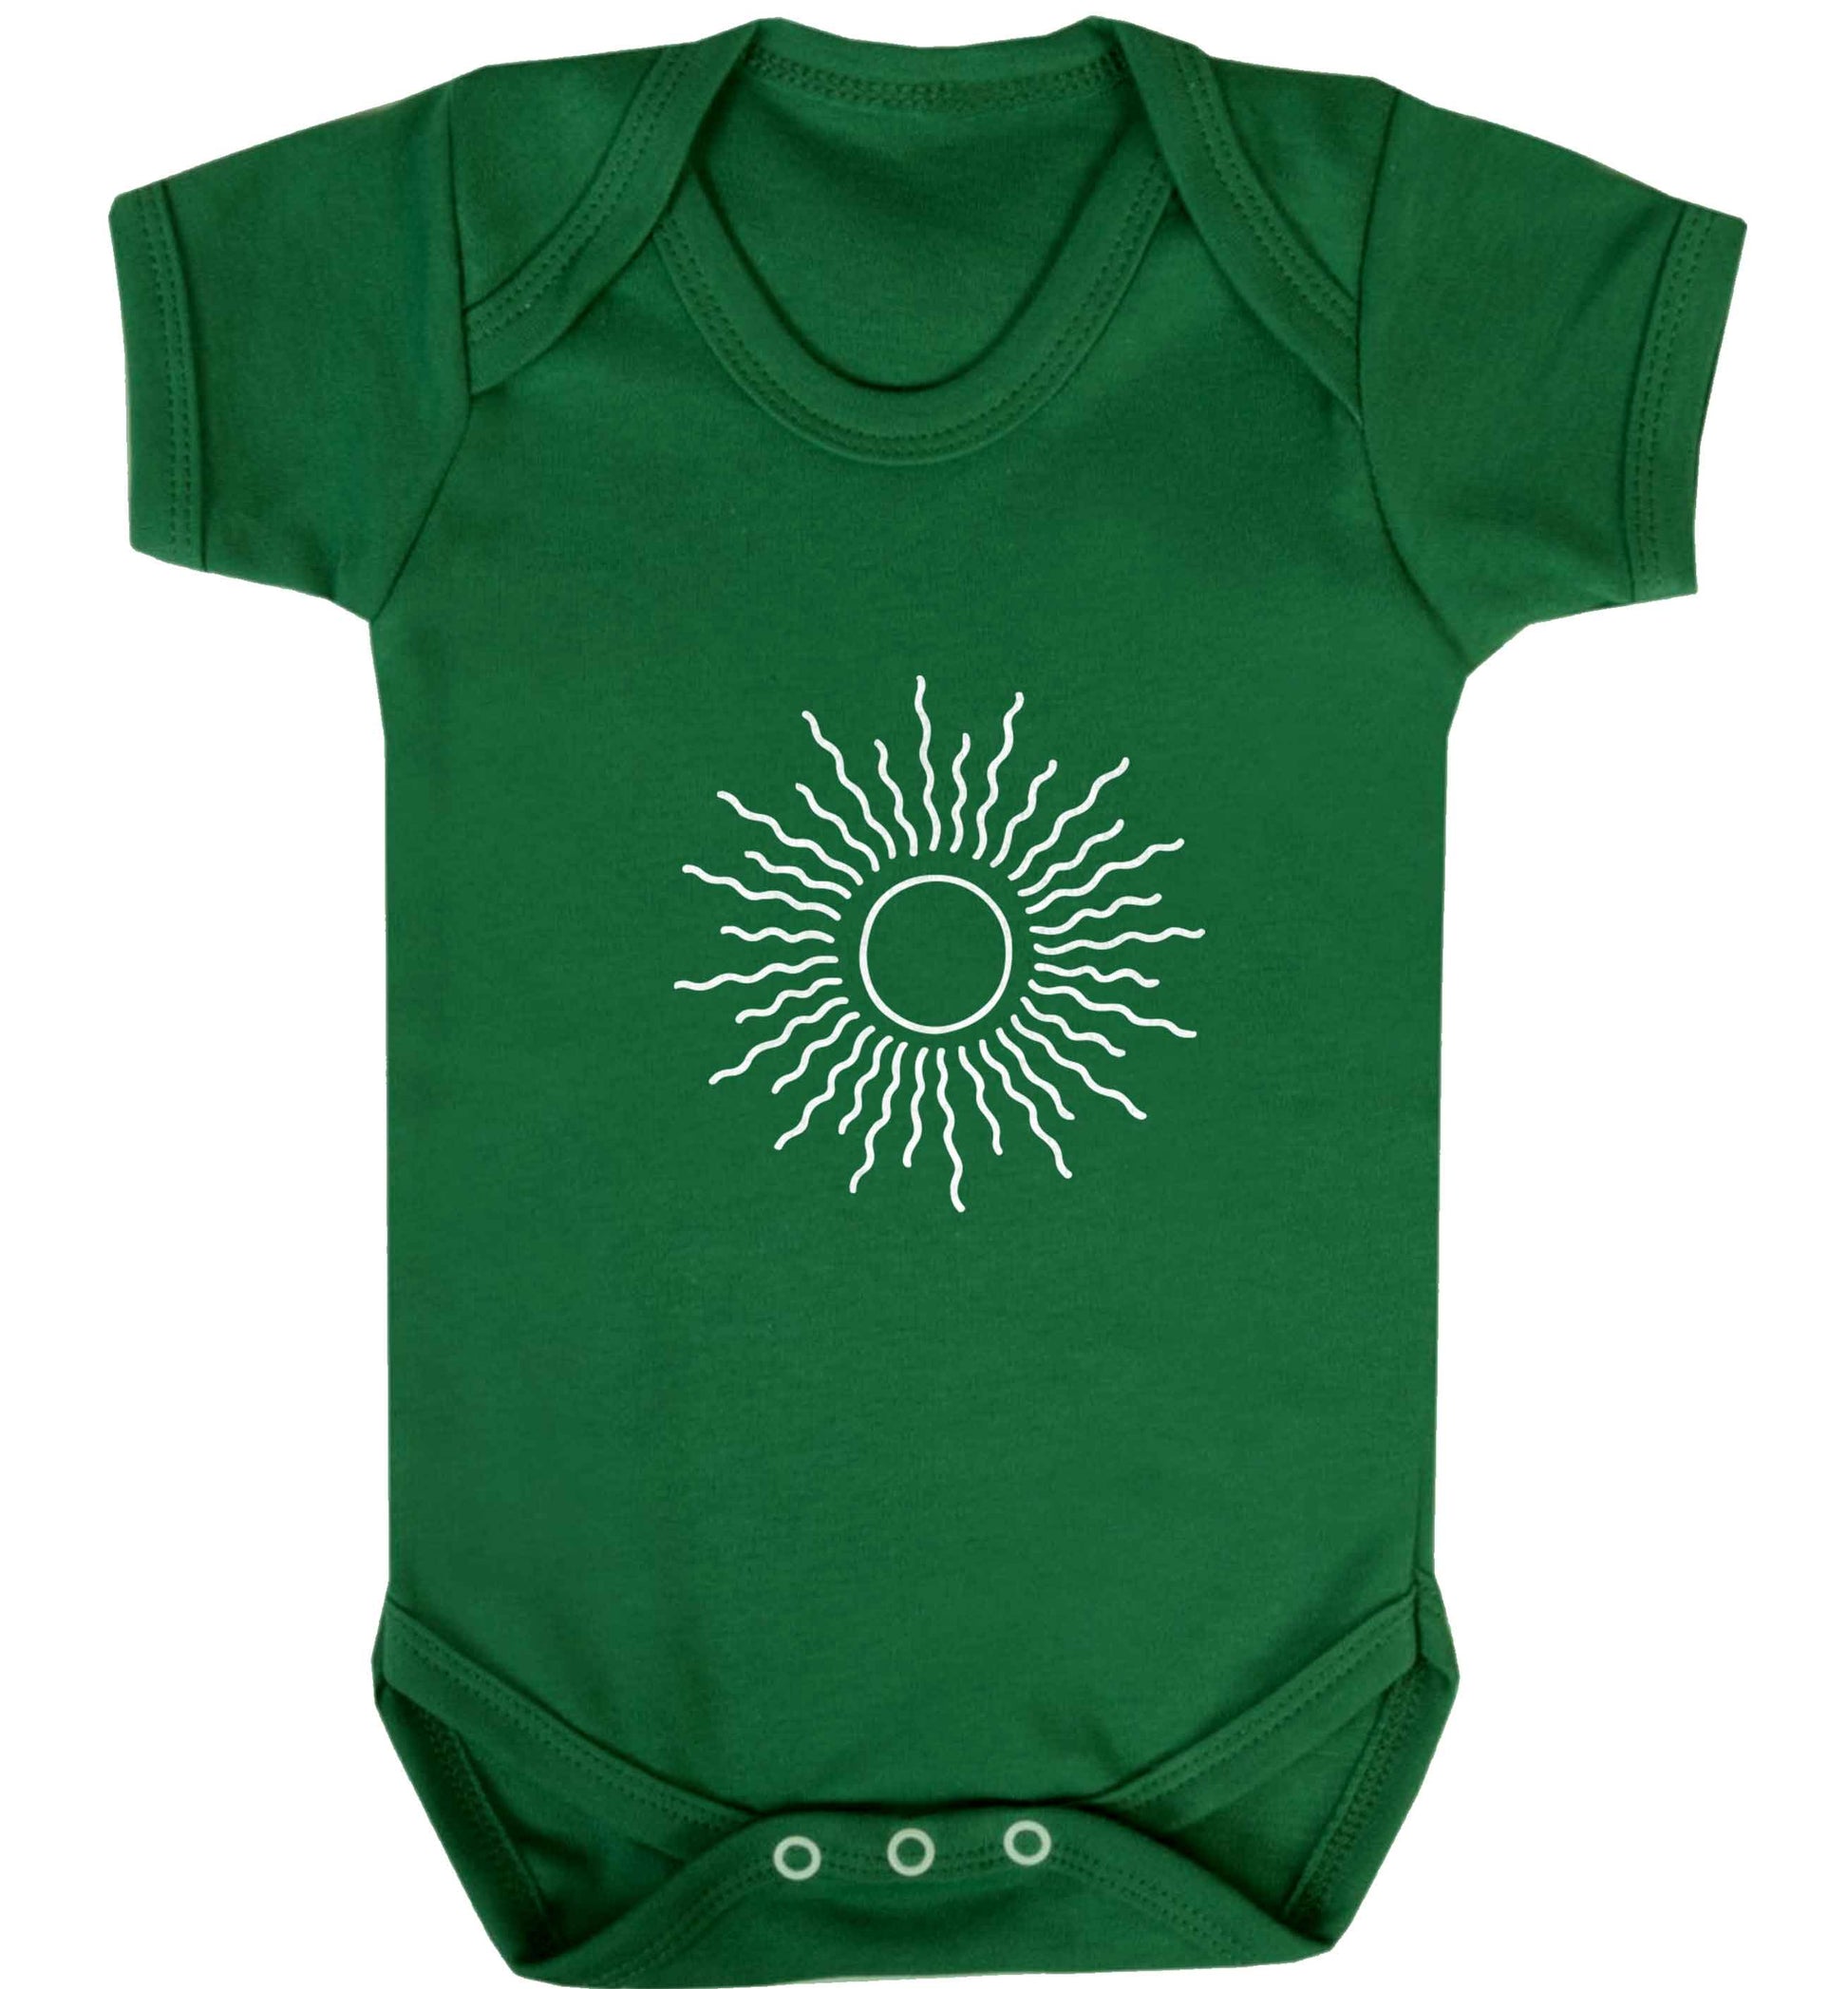 Sun illustration baby vest green 18-24 months